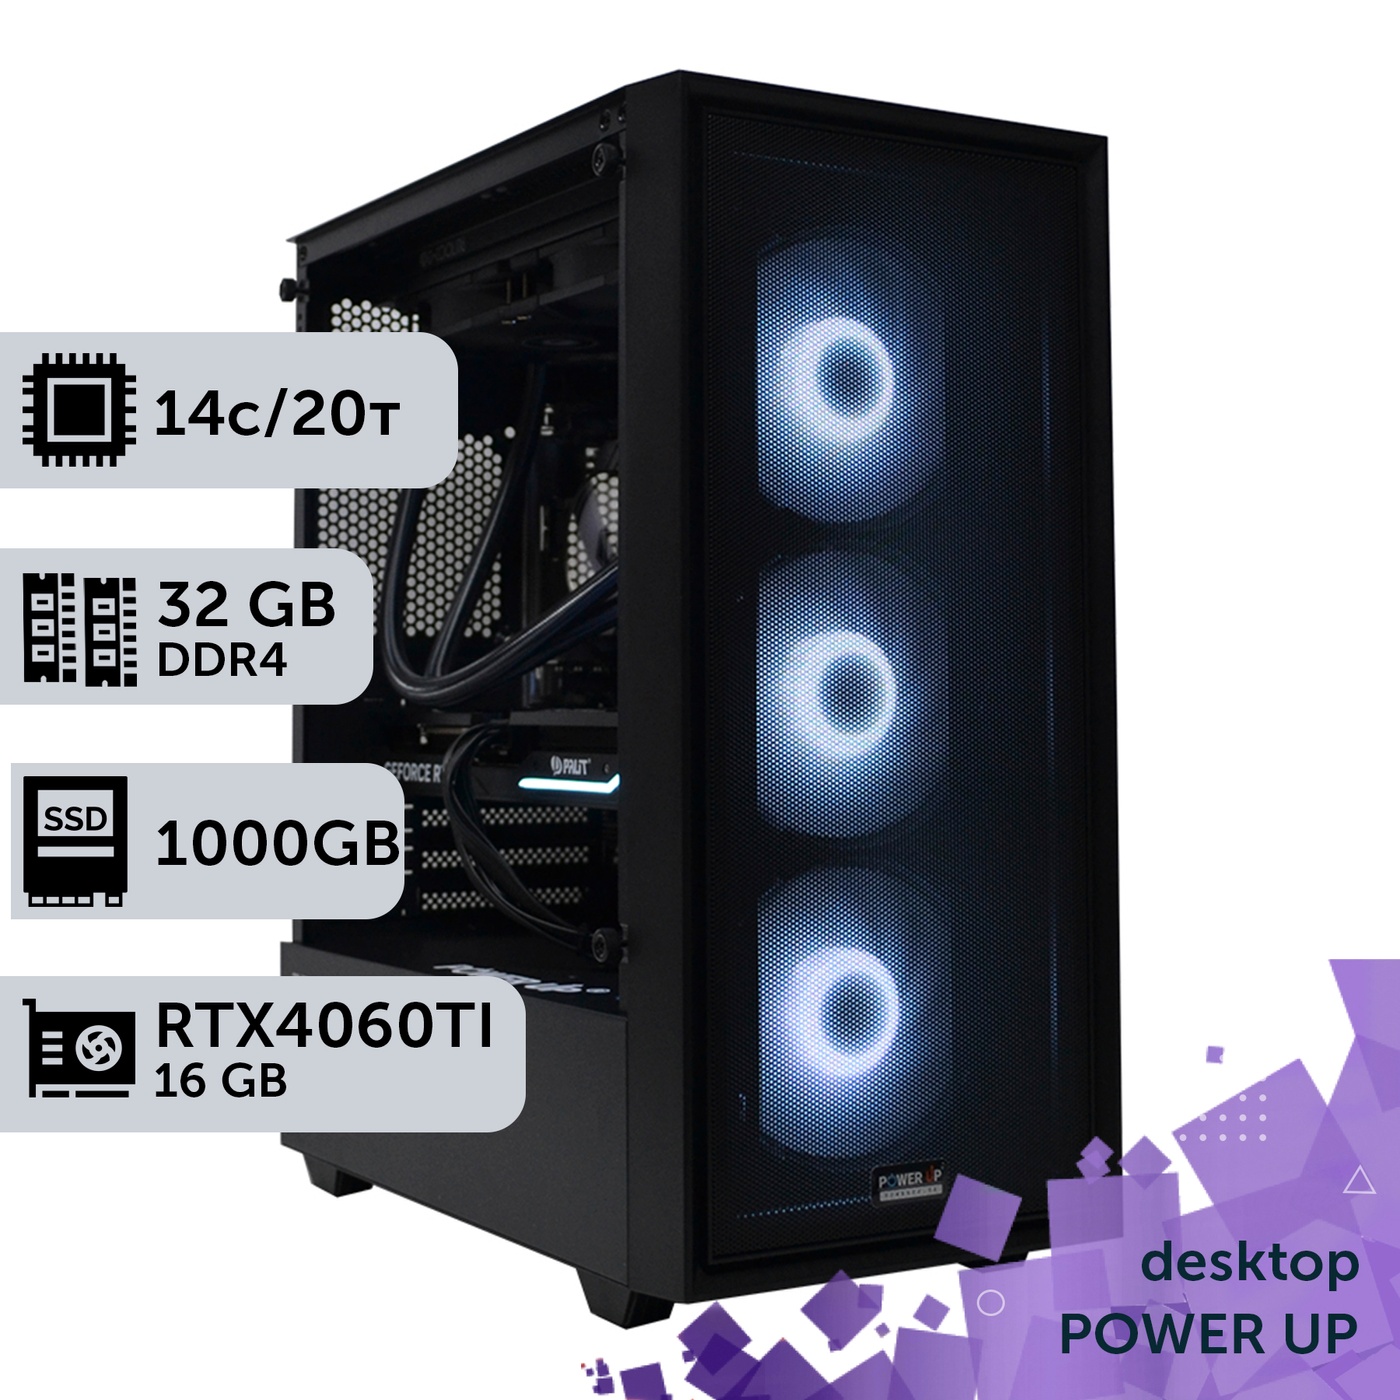 Рабочая станция PowerUp Desktop #304 Core i5 14600K/32 GB/SSD 1TB/GeForce RTX 4060Ti 16GB